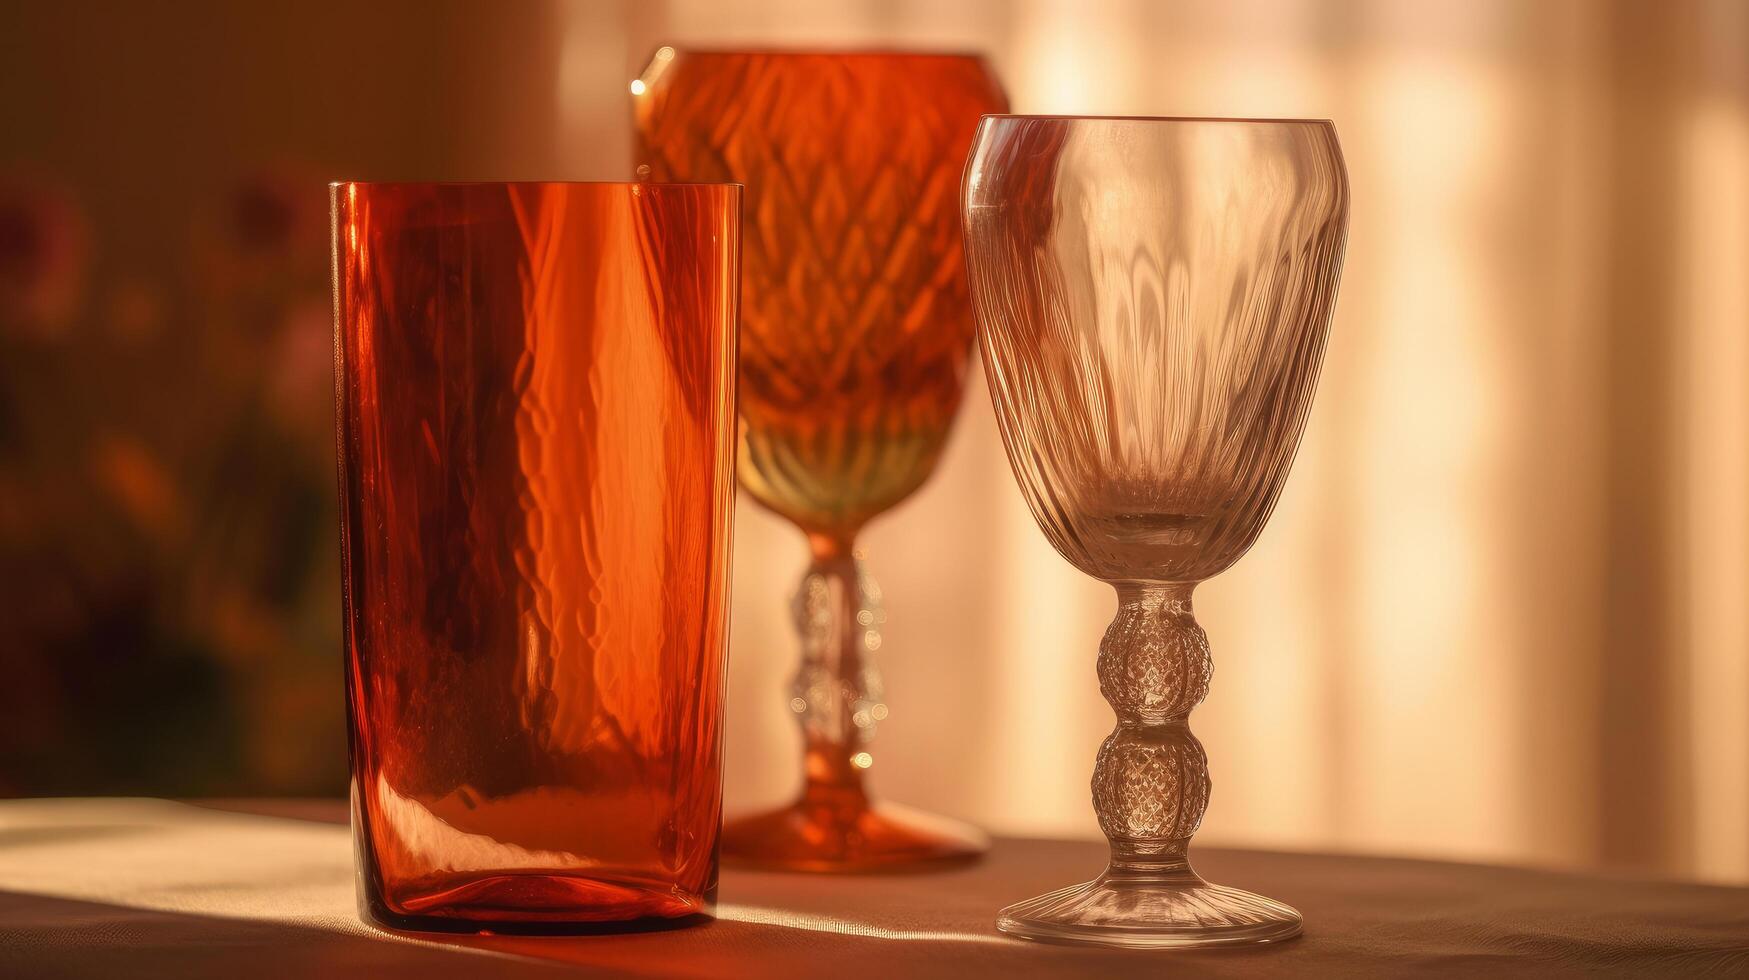 Bohemian glass. Illustration photo